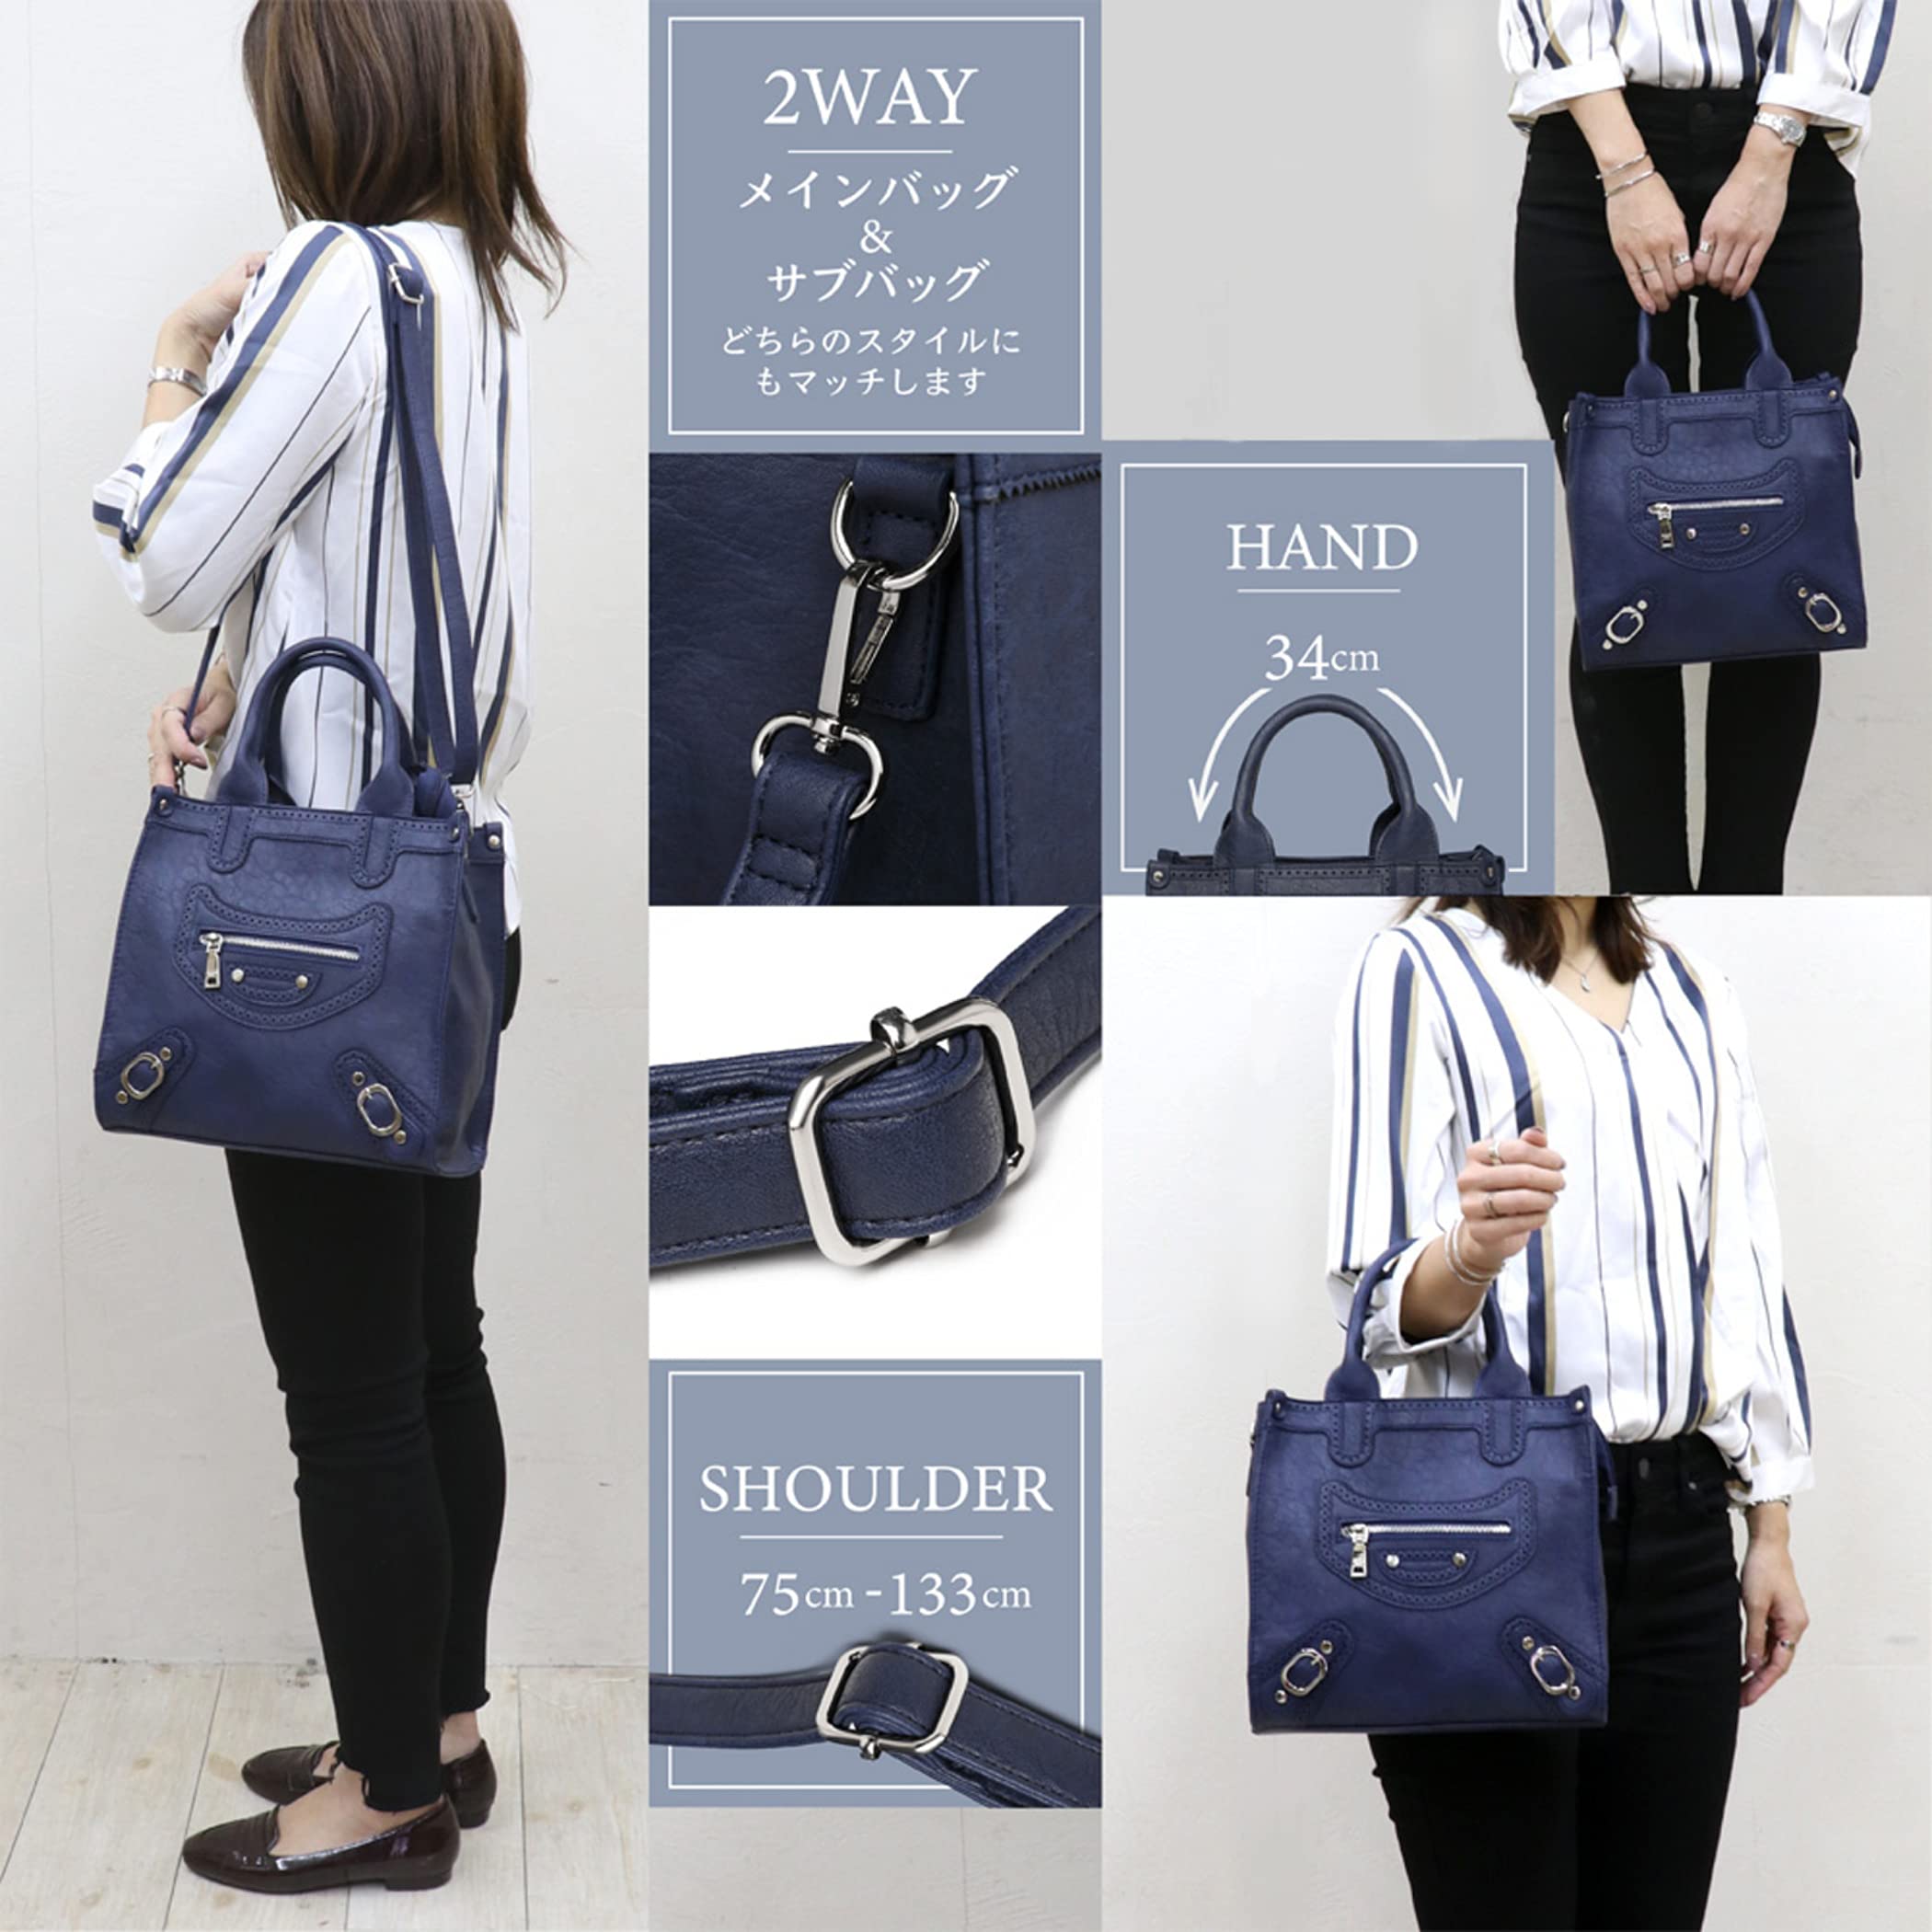 Guscio Basic 120909 2-Way Women’s Handbag, Shoulder Bag, Punching Processing, Square Shape, PU Leather, Adult, Cute, Stylish